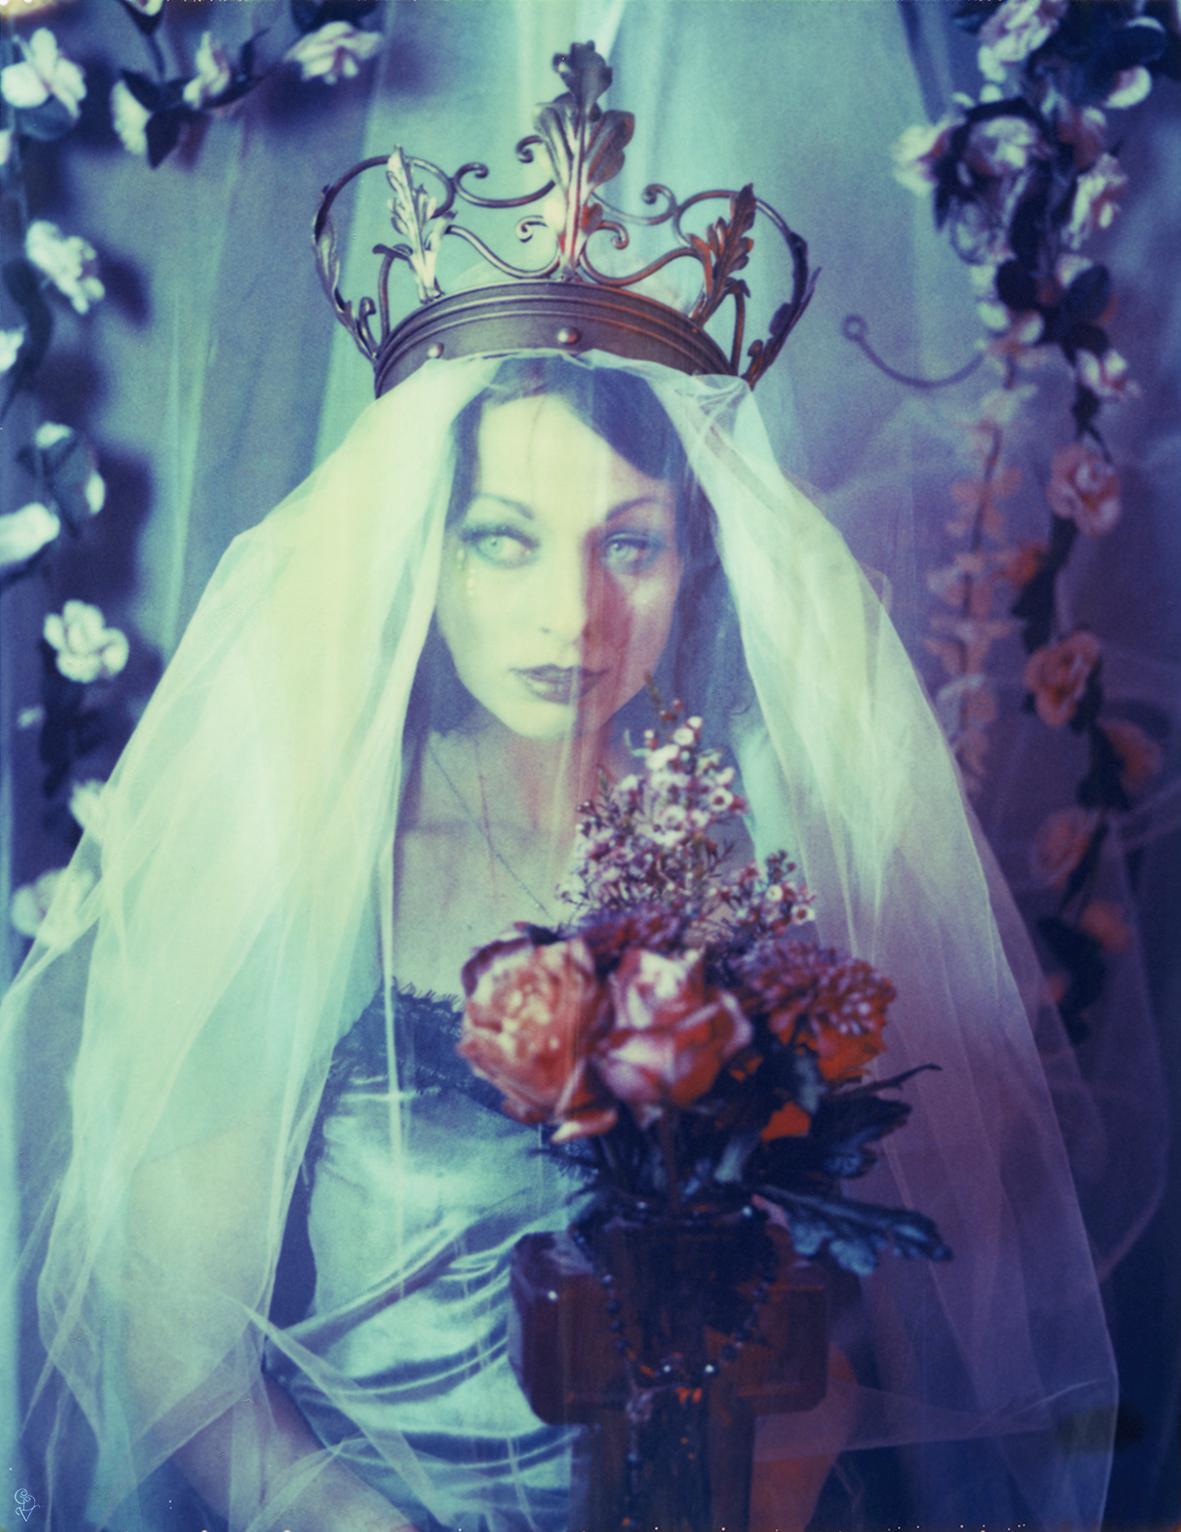 Carmen de Vos Portrait Photograph - The Chaste Madonna [From the series Fox Almighty] - Polaroid, Women, Color